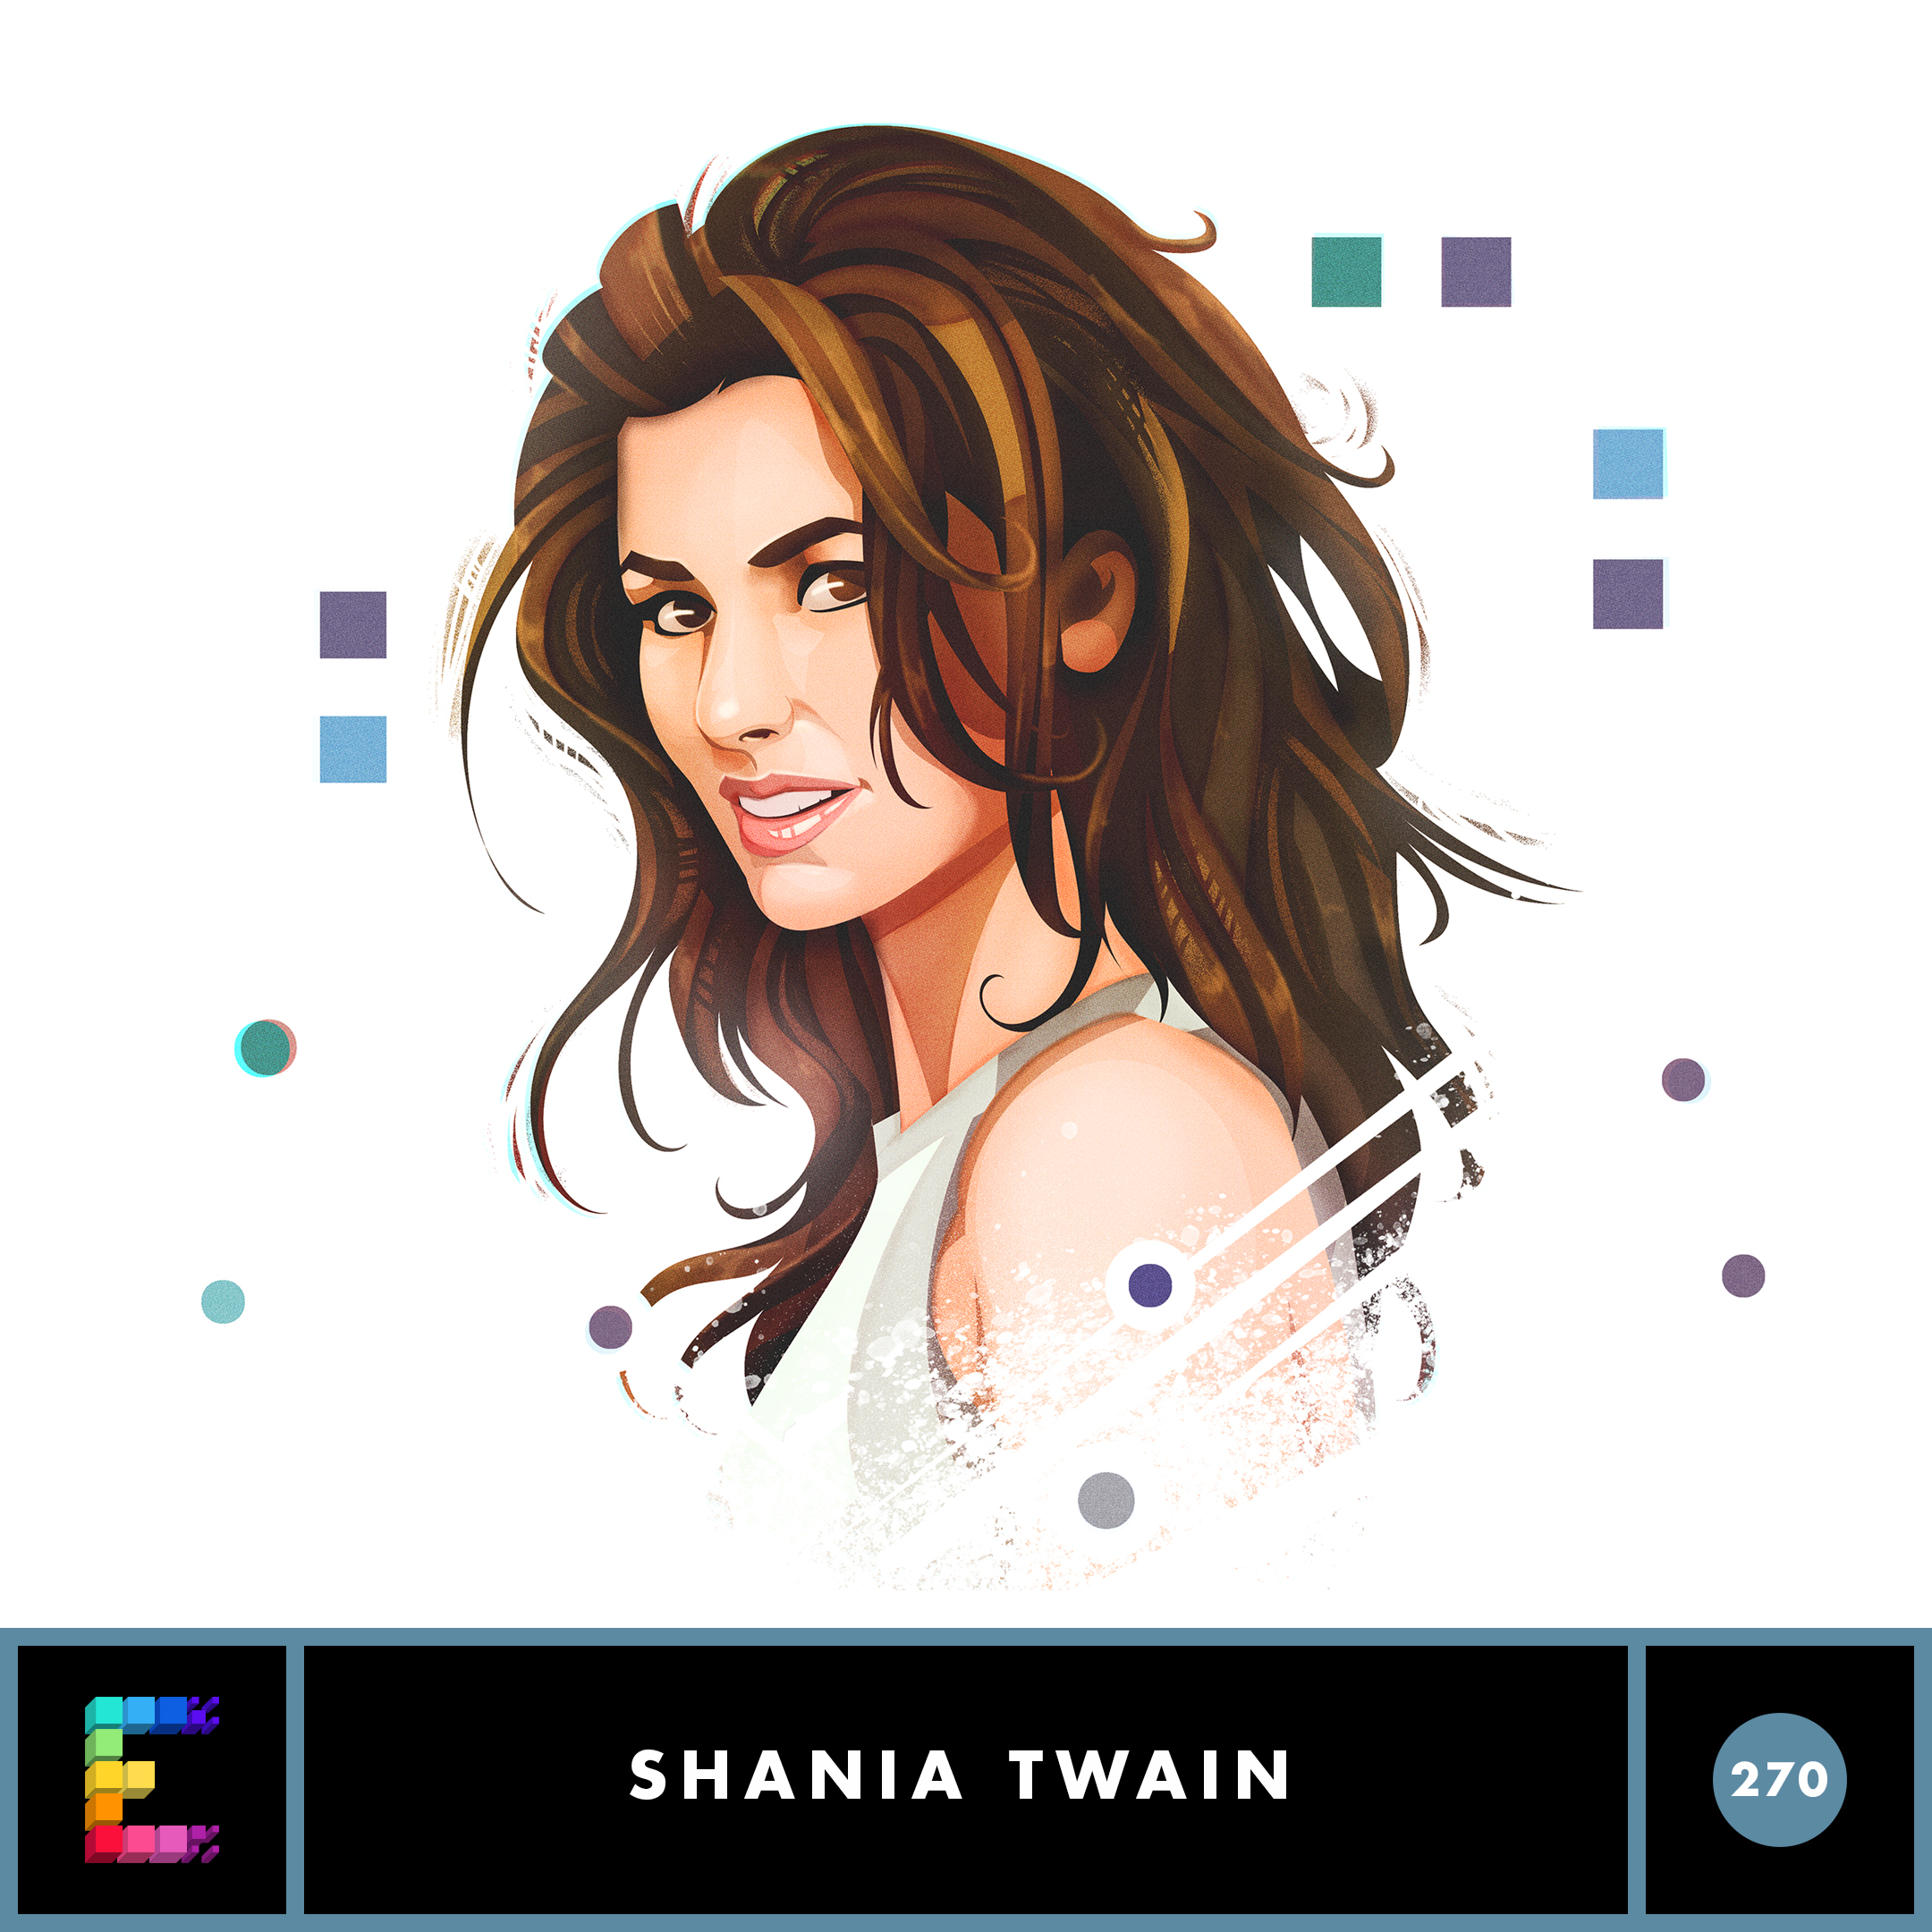 Shania Twain - You're Still The One